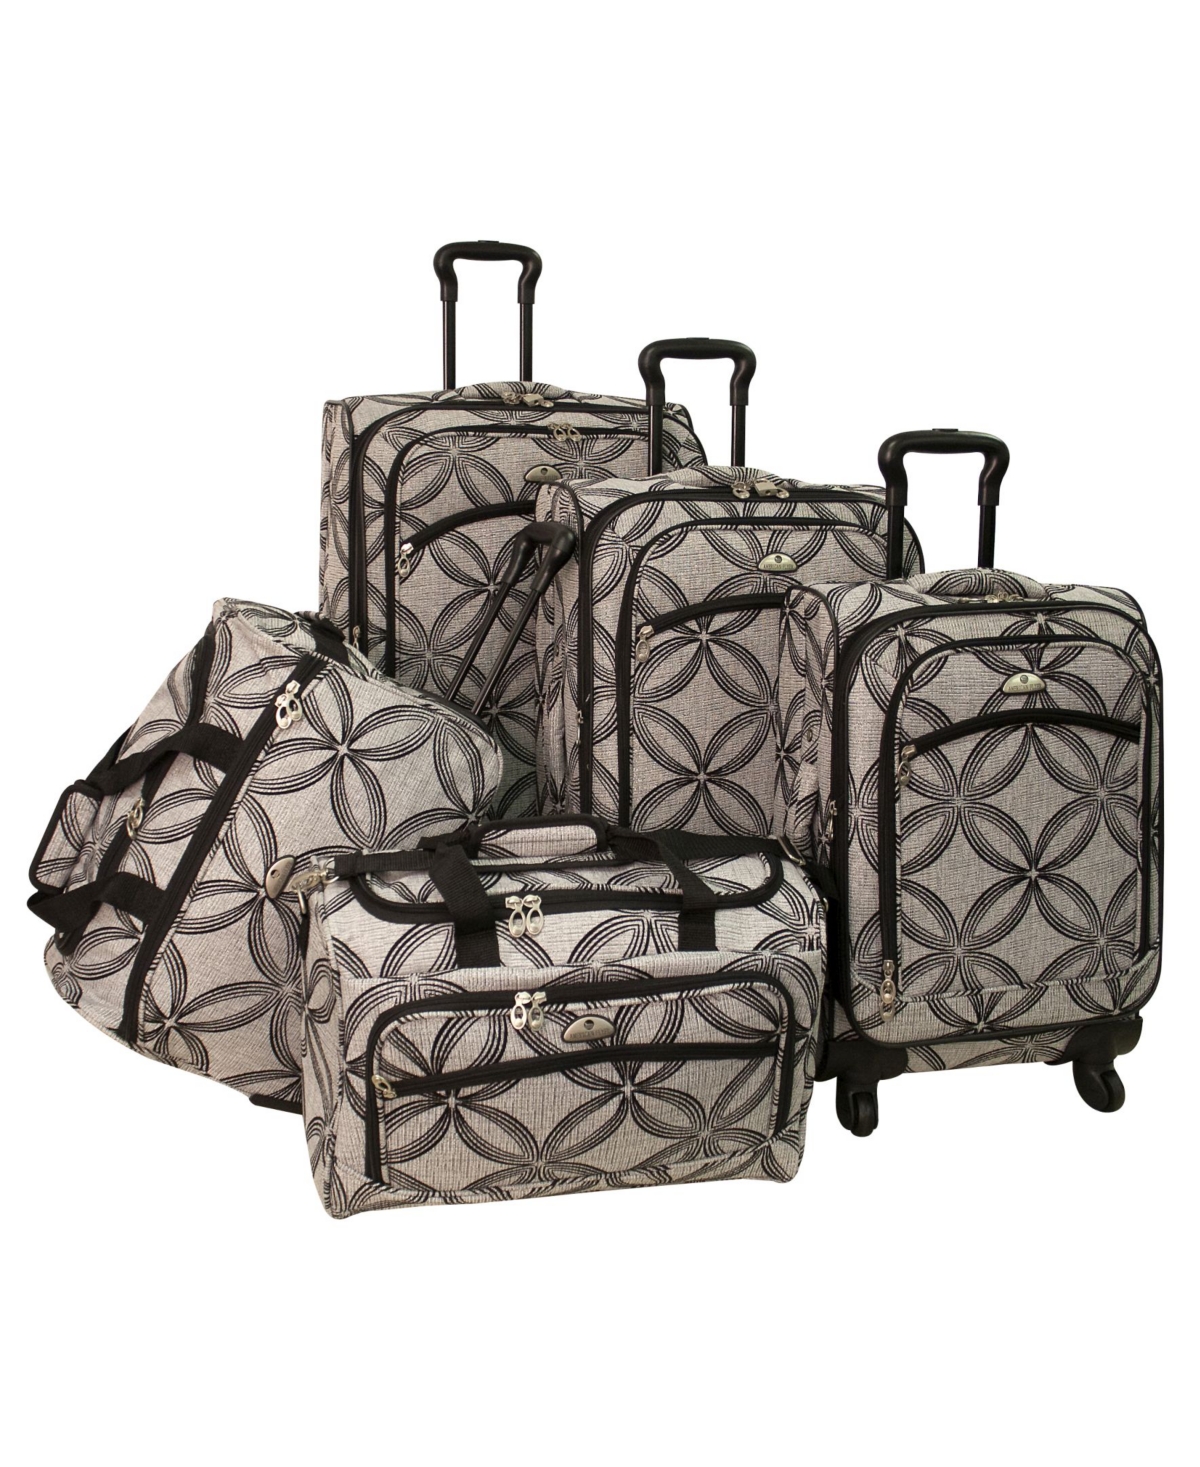 Clover 5 Piece Spinner Luggage Set - Black